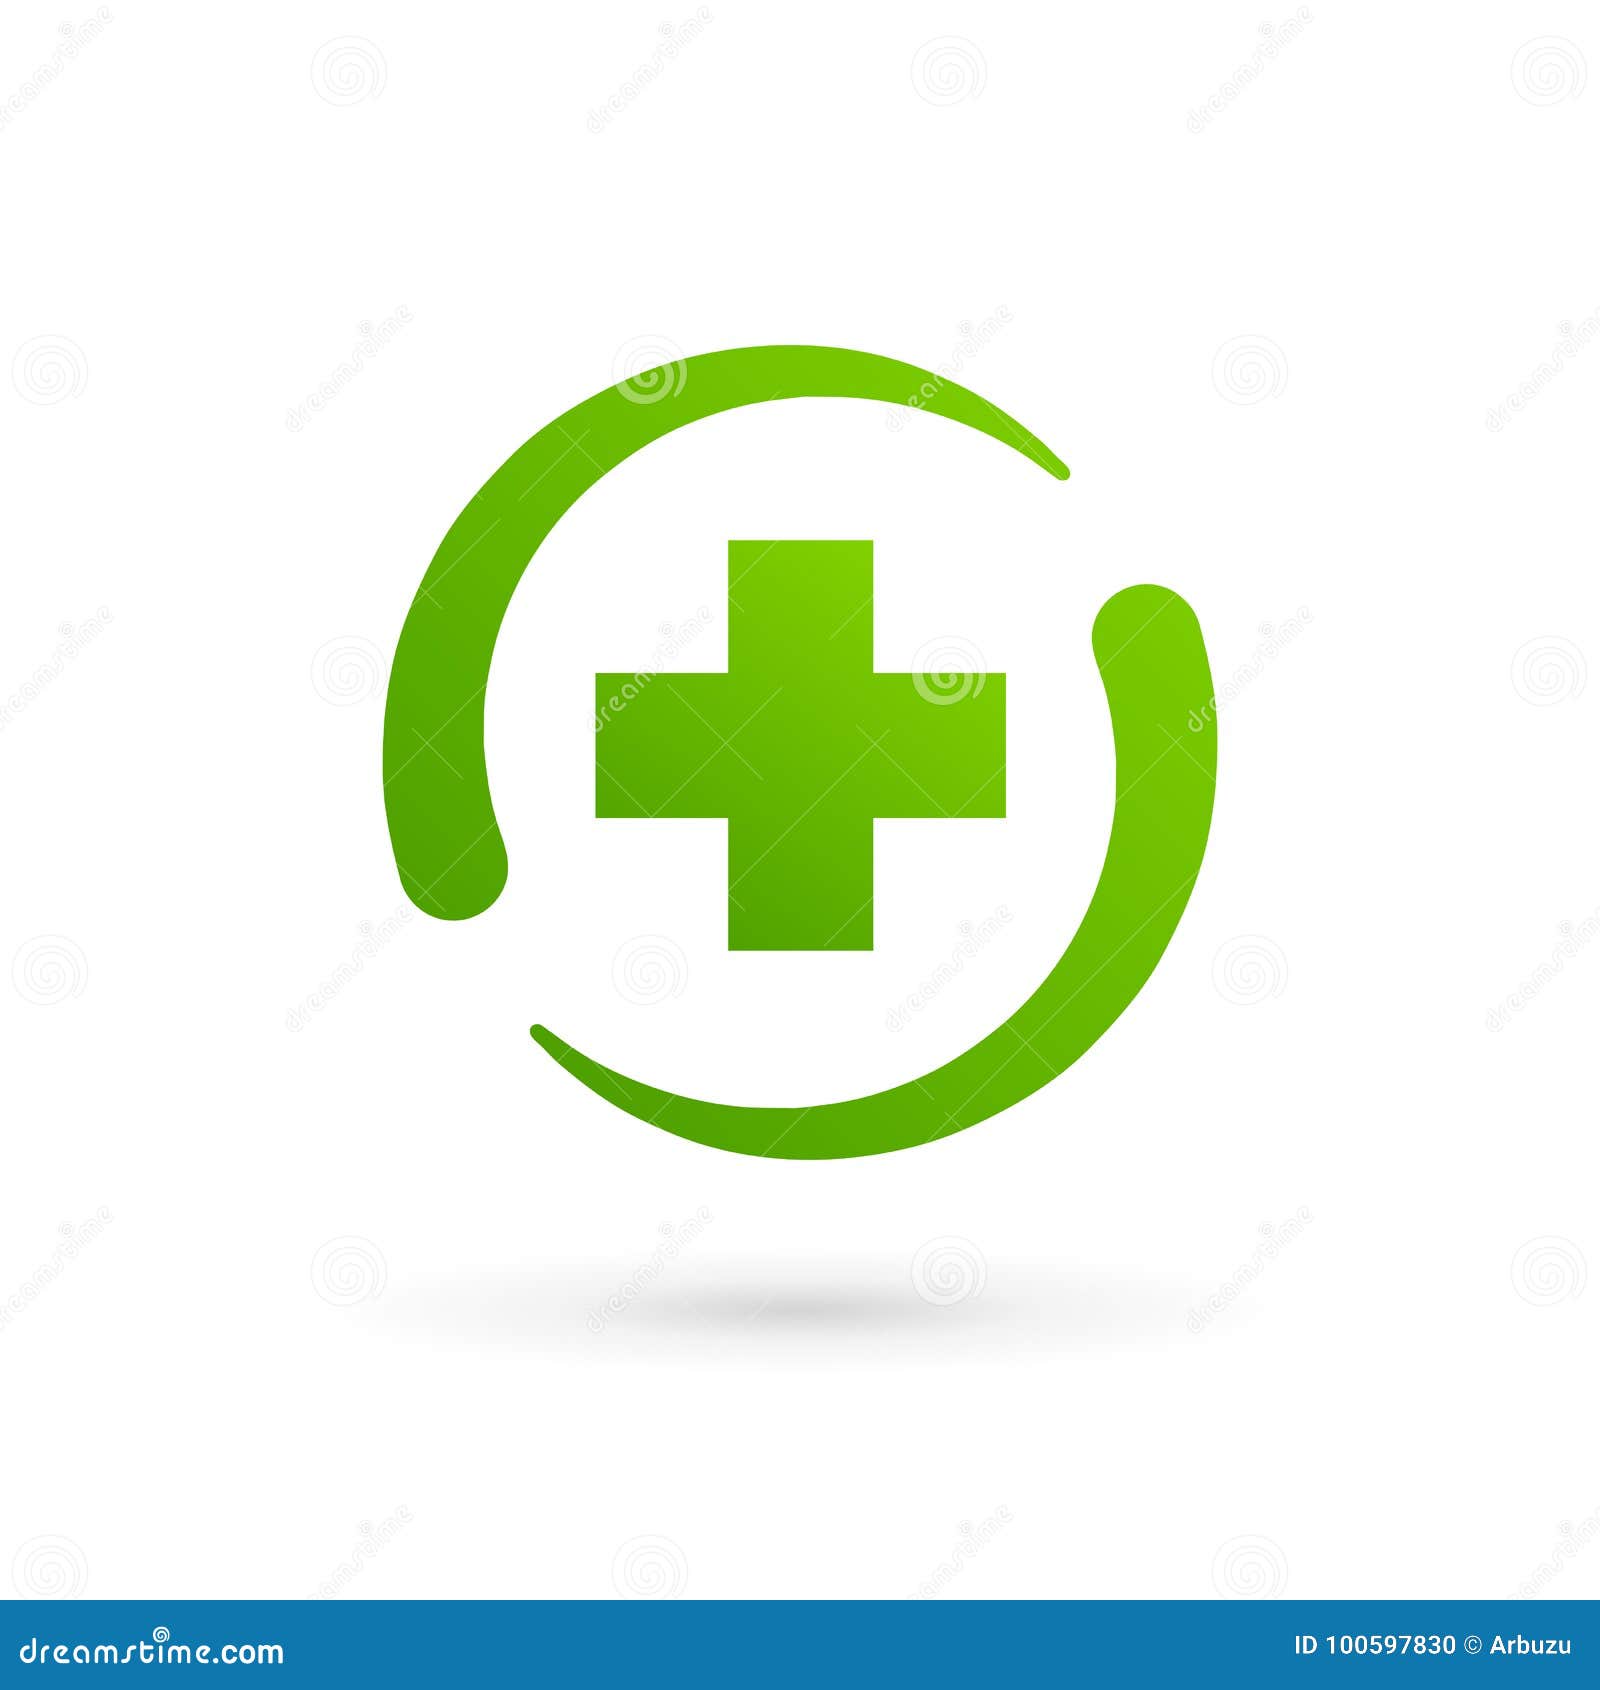 Gradient Medical Plus Logo | BrandCrowd Logo Maker